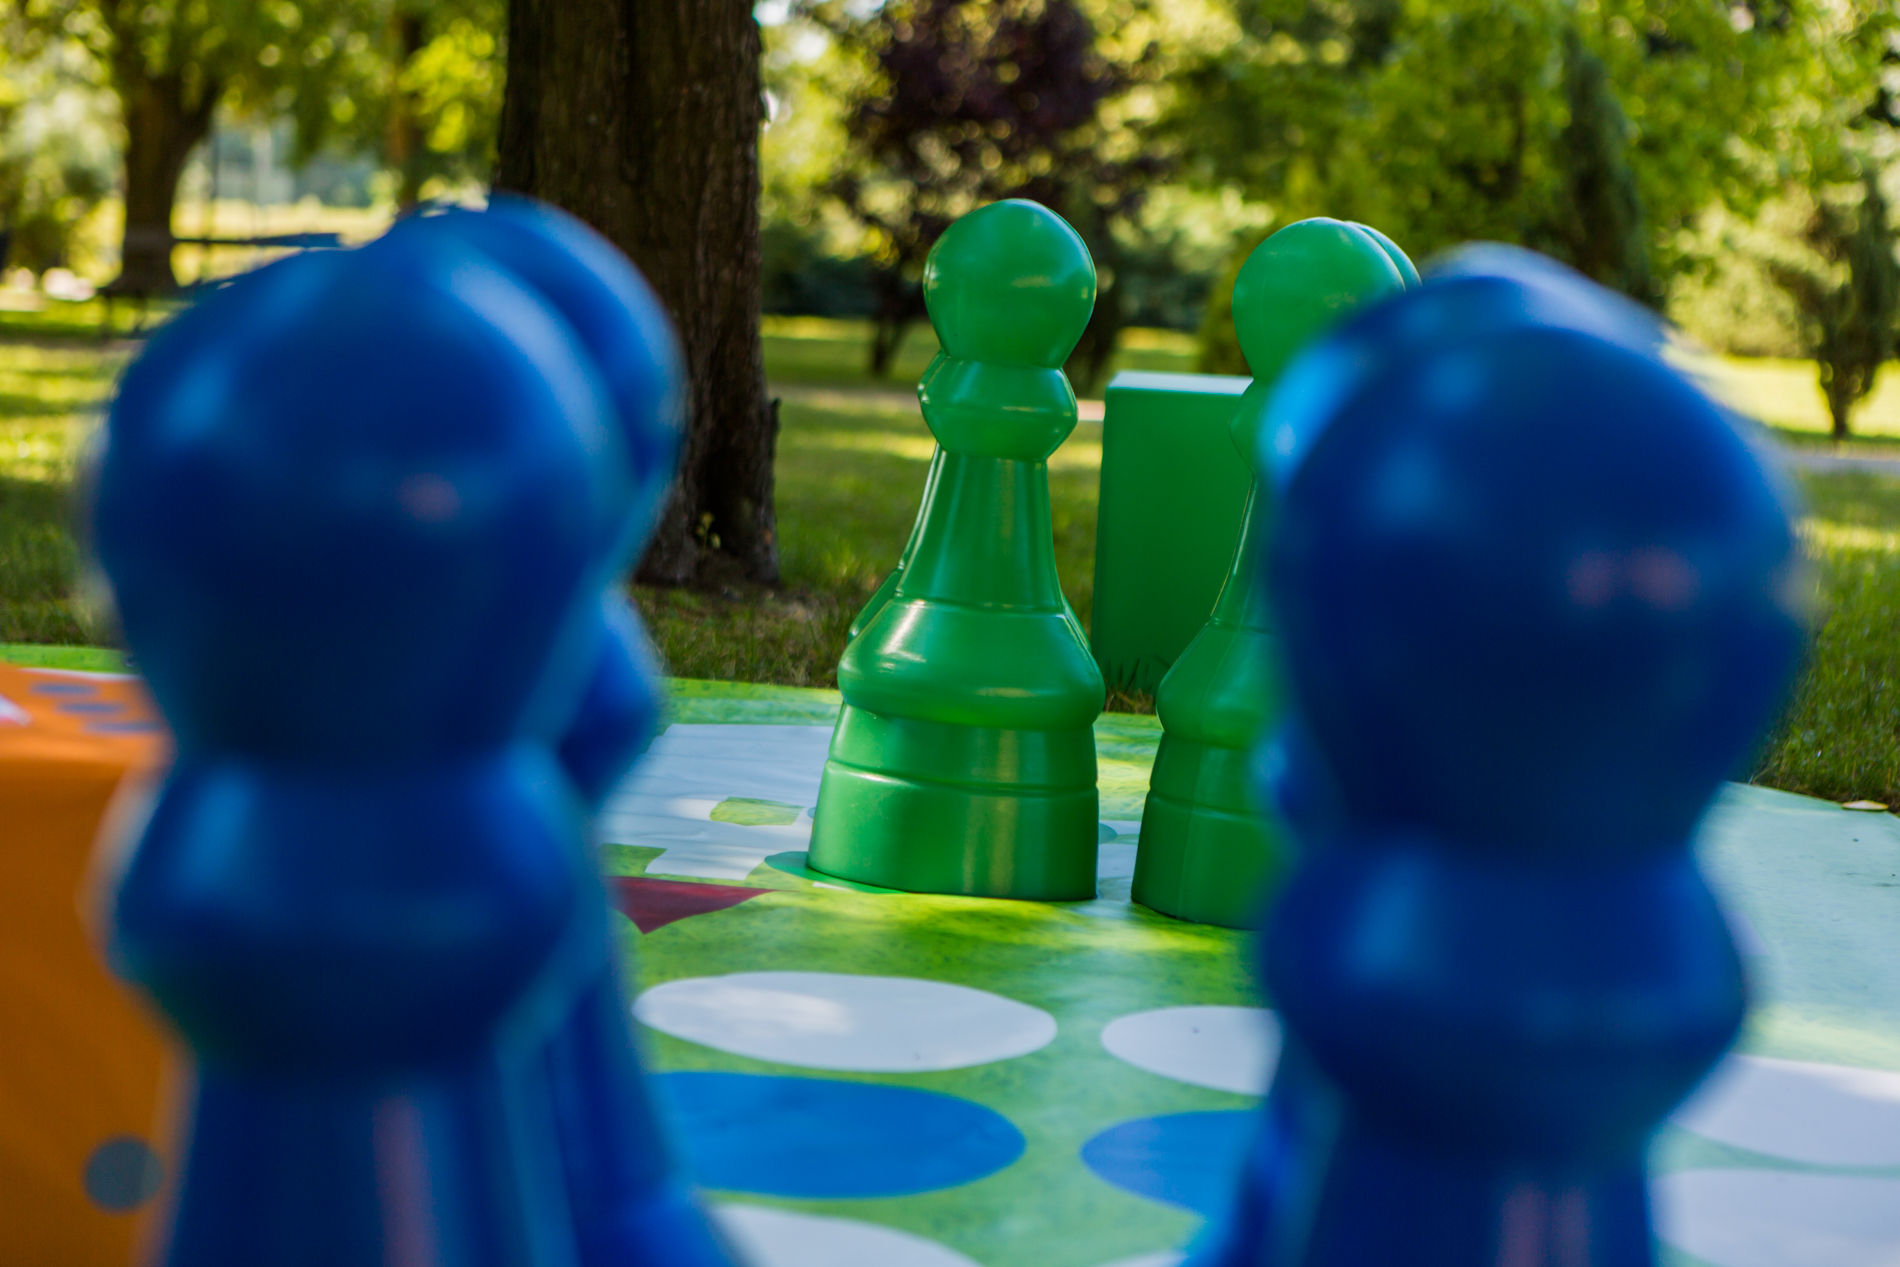 Garden Giant Plastic Chess Pieces - PAWN